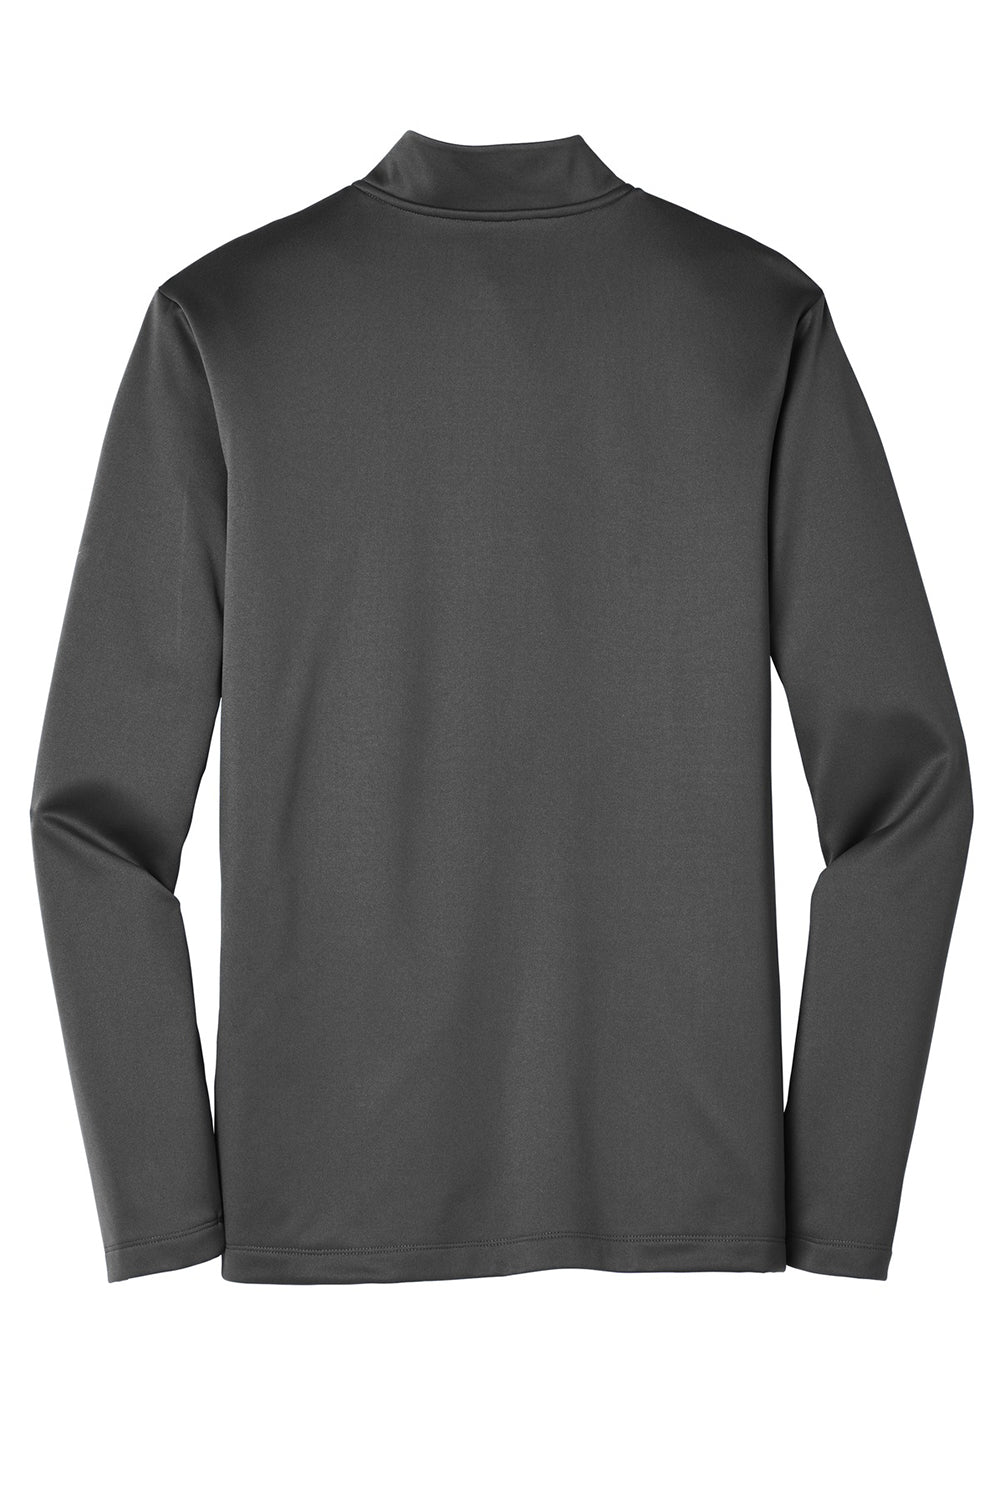 Nike NKAH6418 Mens Therma-Fit Moisture Wicking Fleece Full Zip Sweatshirt Anthracite Grey Flat Back